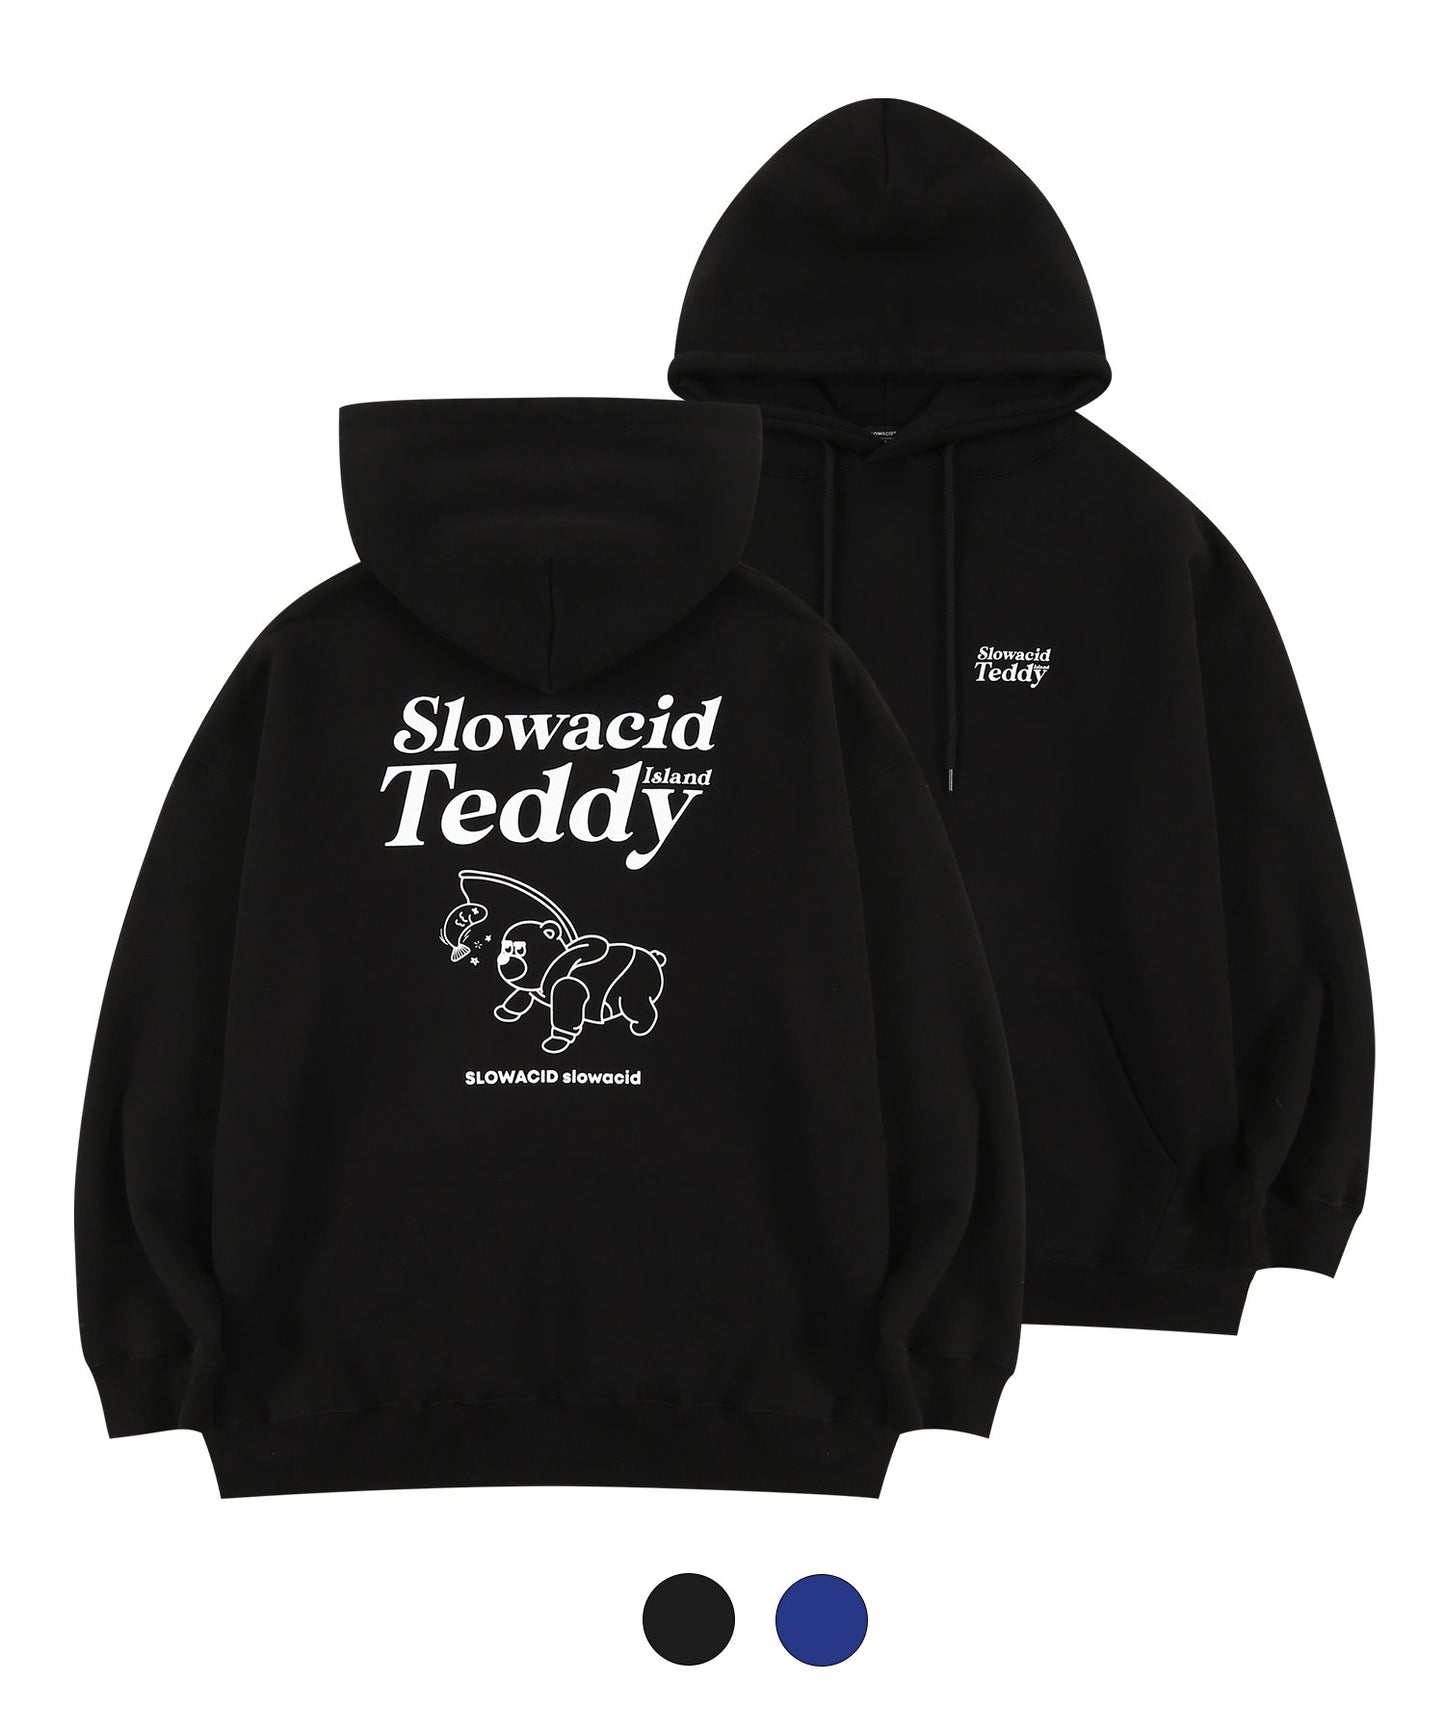 [NCT] Slow Acid x Teddy Island : Salmon Teddy Hoodie